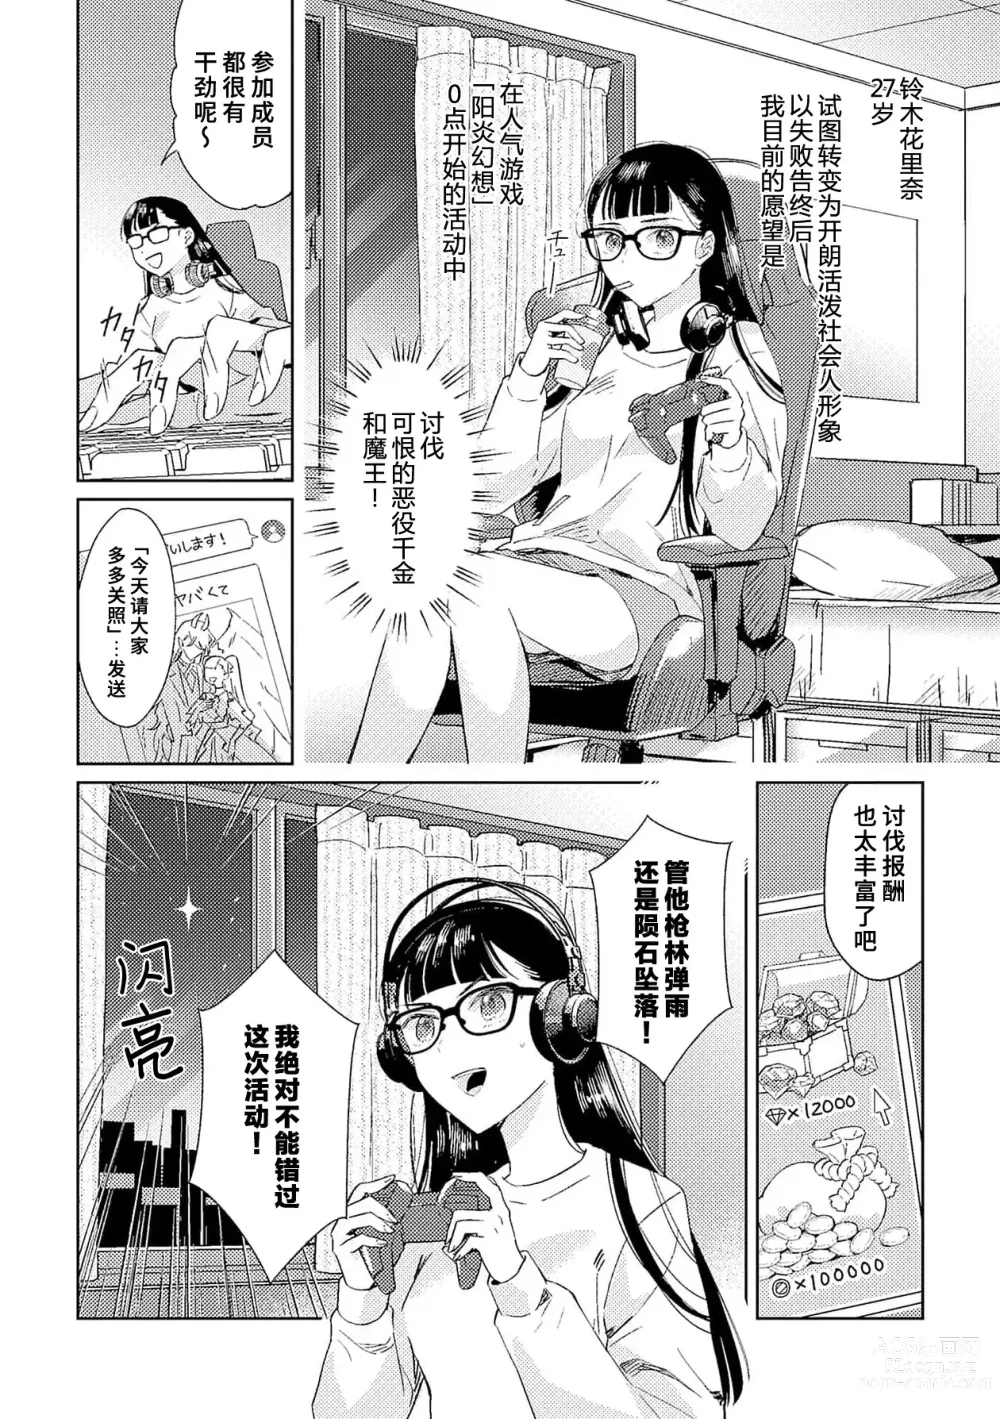 Page 4 of manga 身为恶役千金，堕落于魔界王子身下这条路线真的可以有？ 1-7